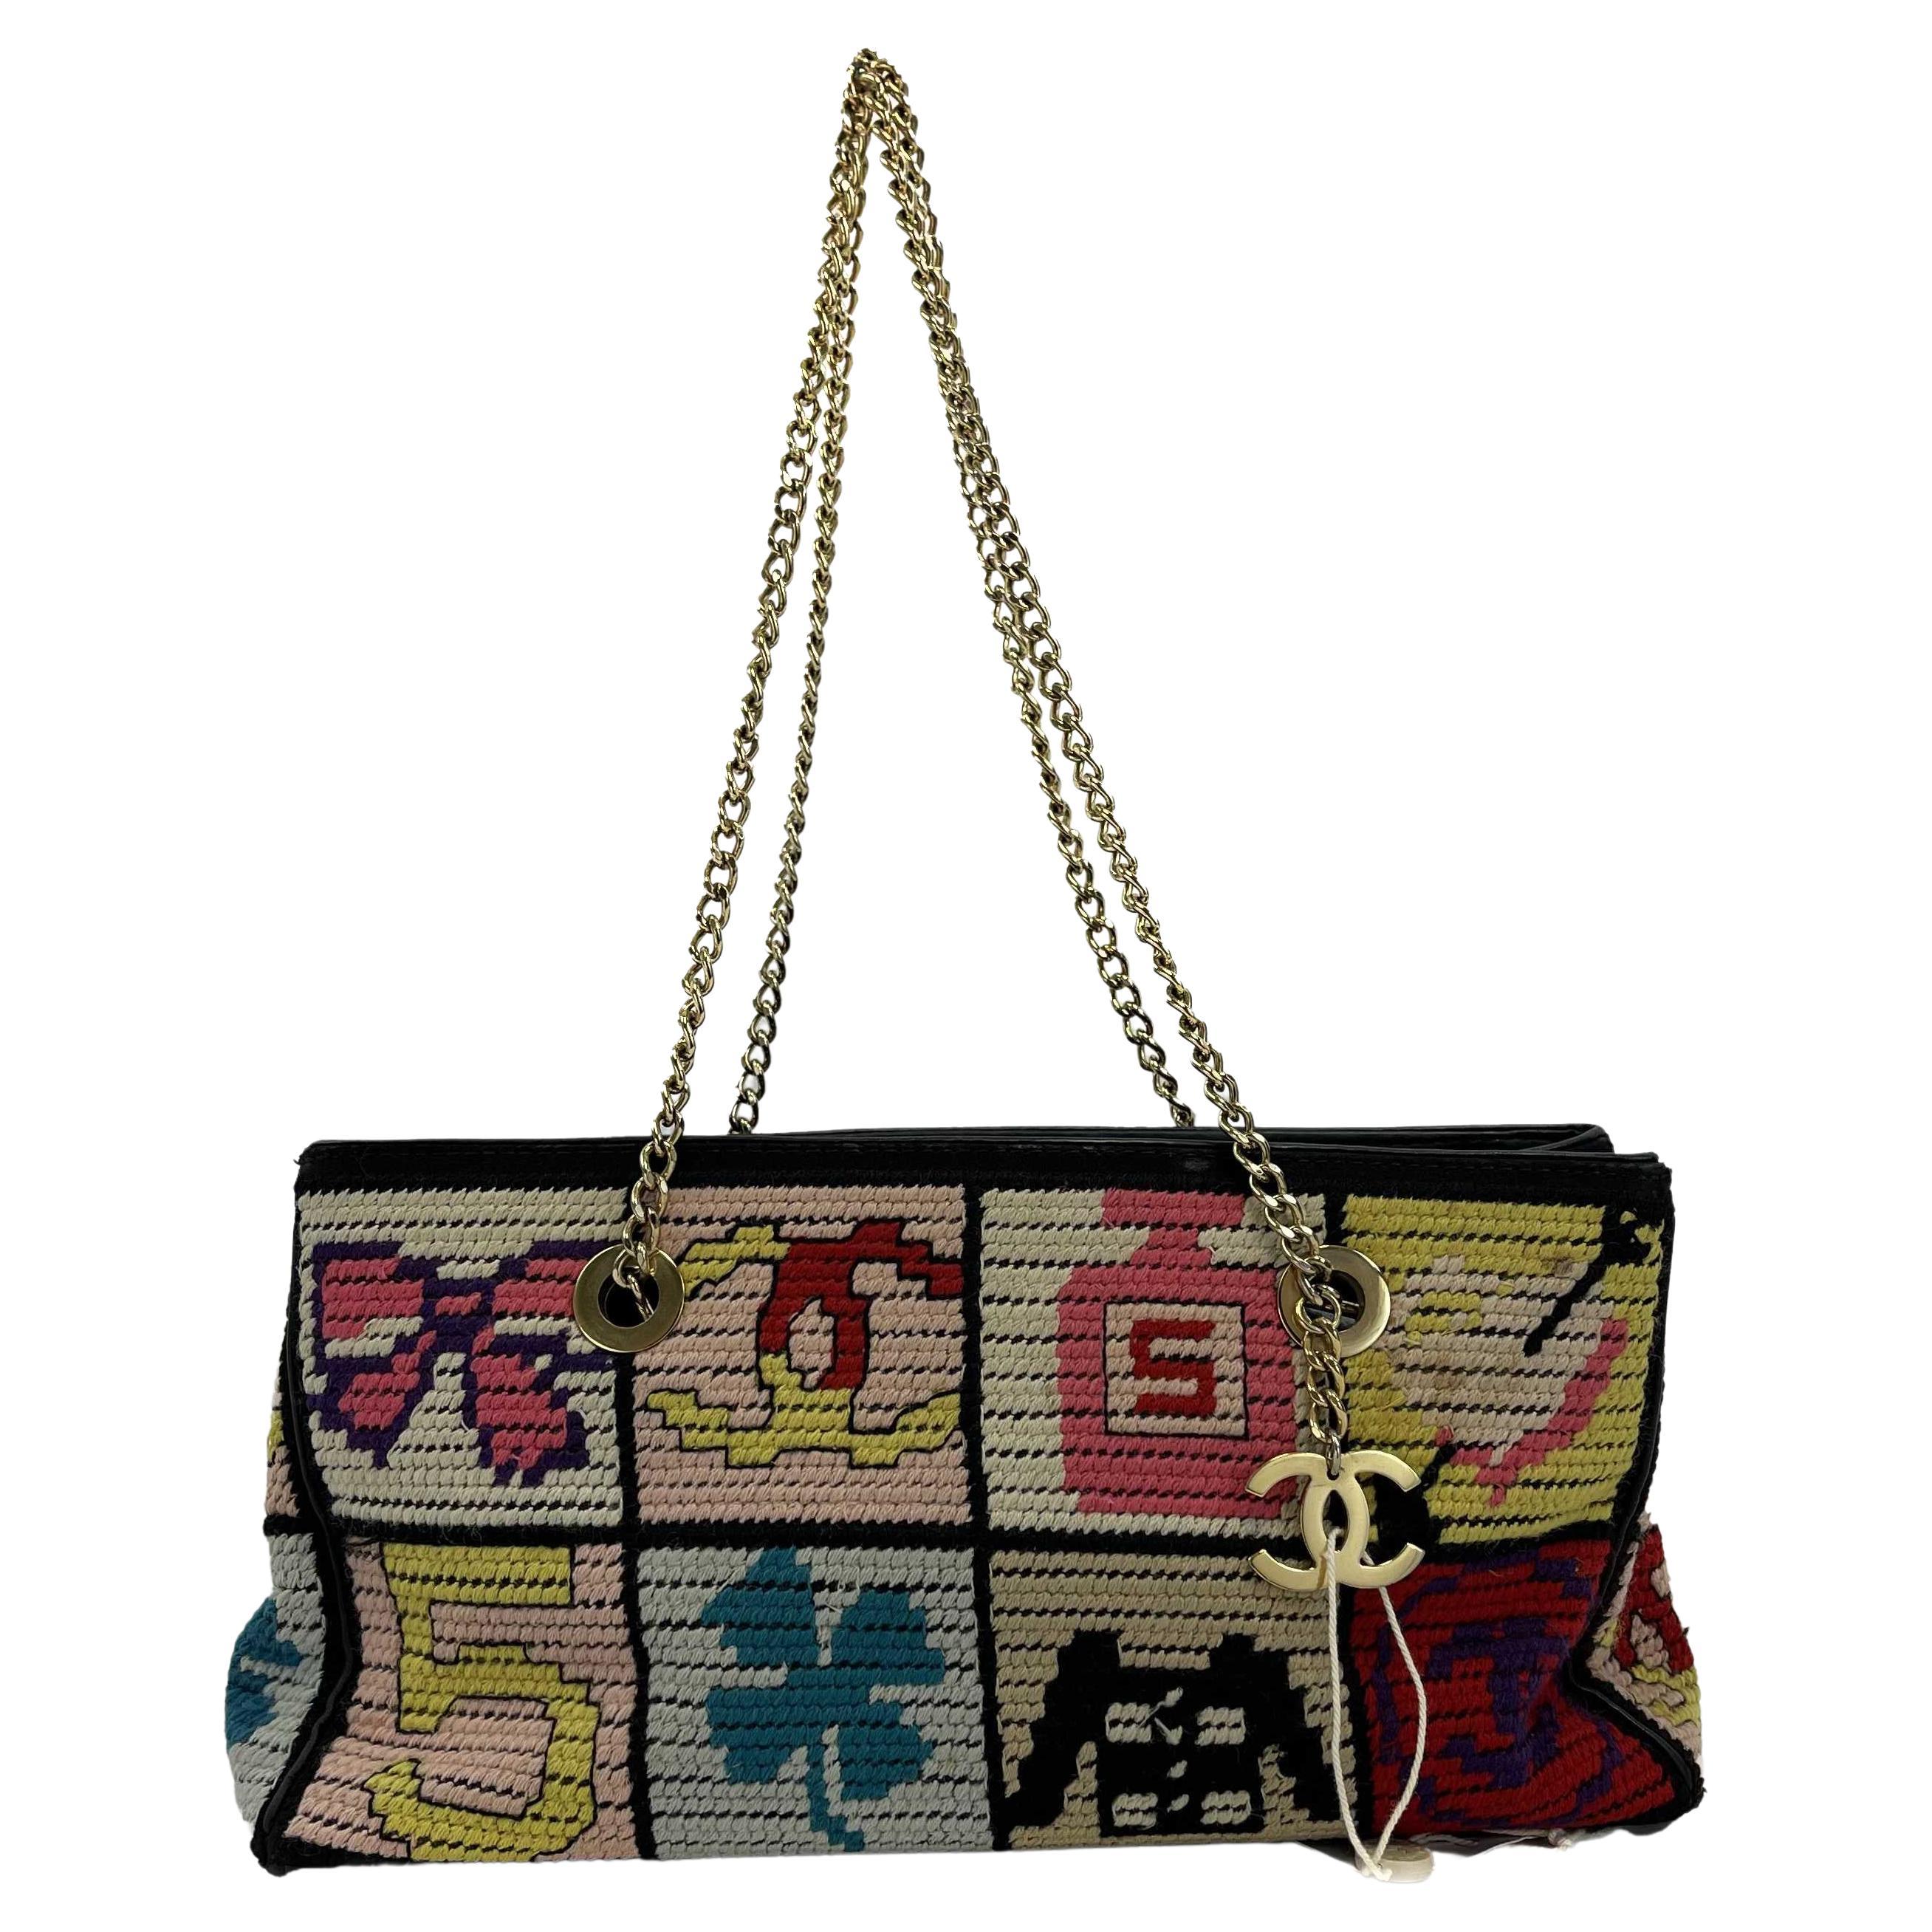 Chanel - Multicolor Knit Needlepoint Patchwork CC Shoulder Bag